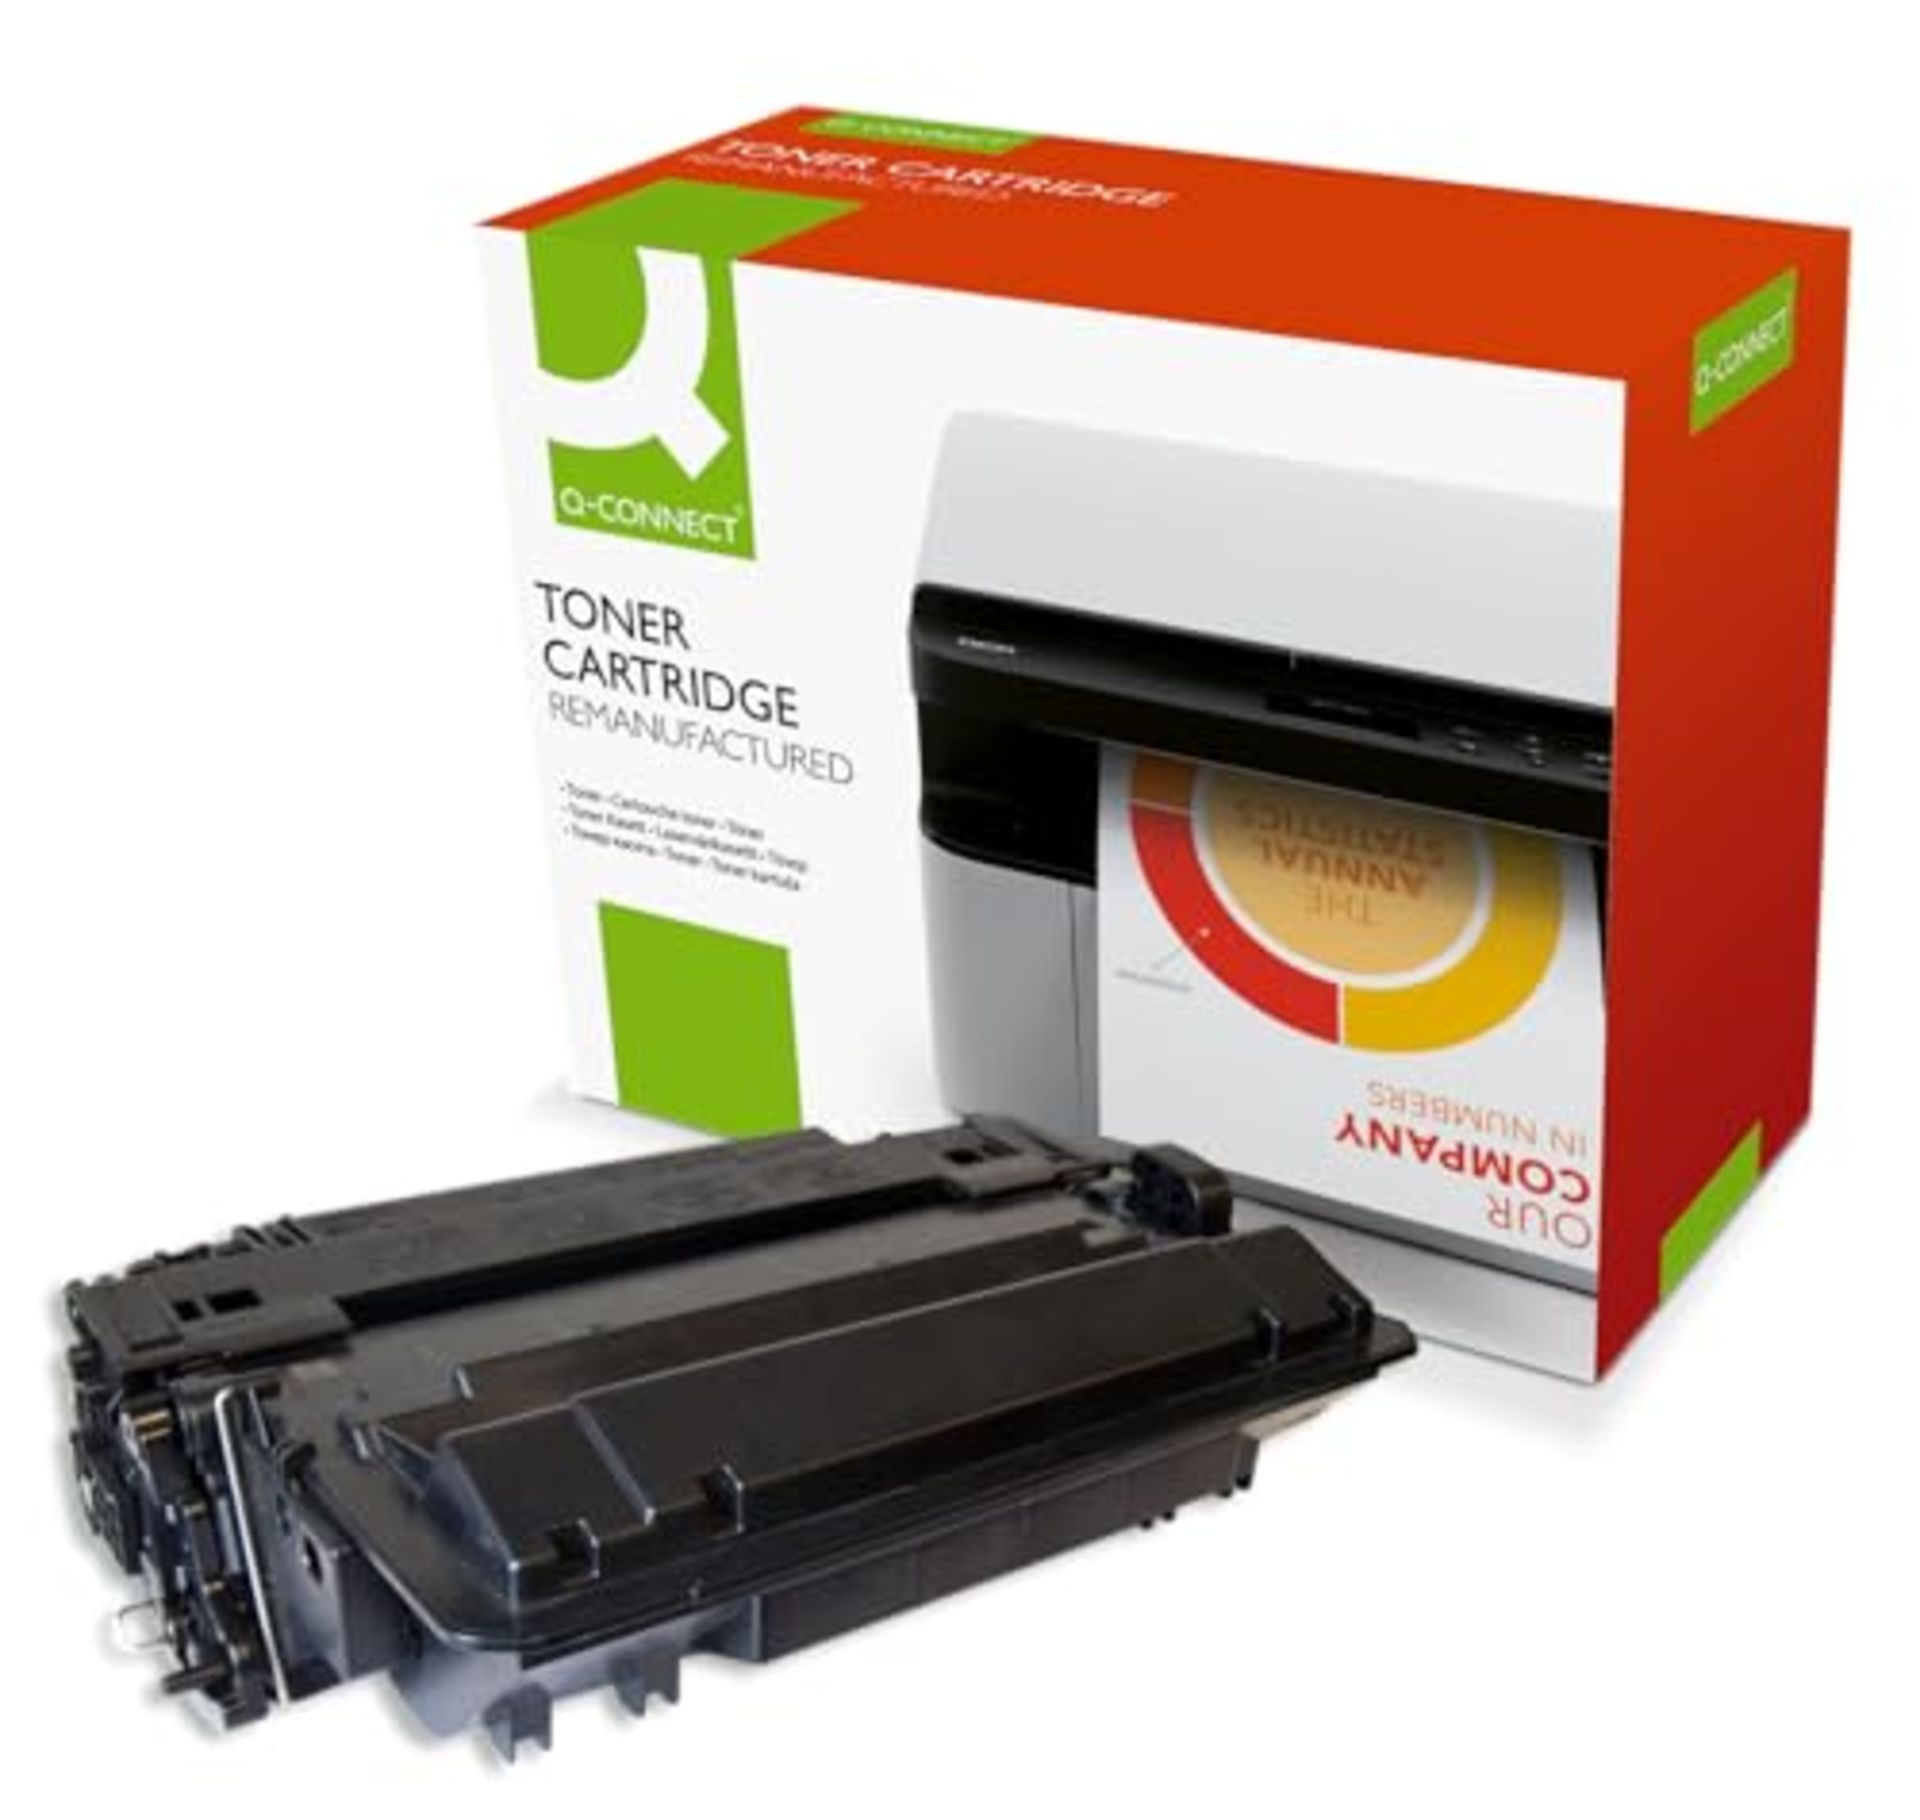 Q-Connect Compatible Toner for HP CE255X Toner Cartridge, Black